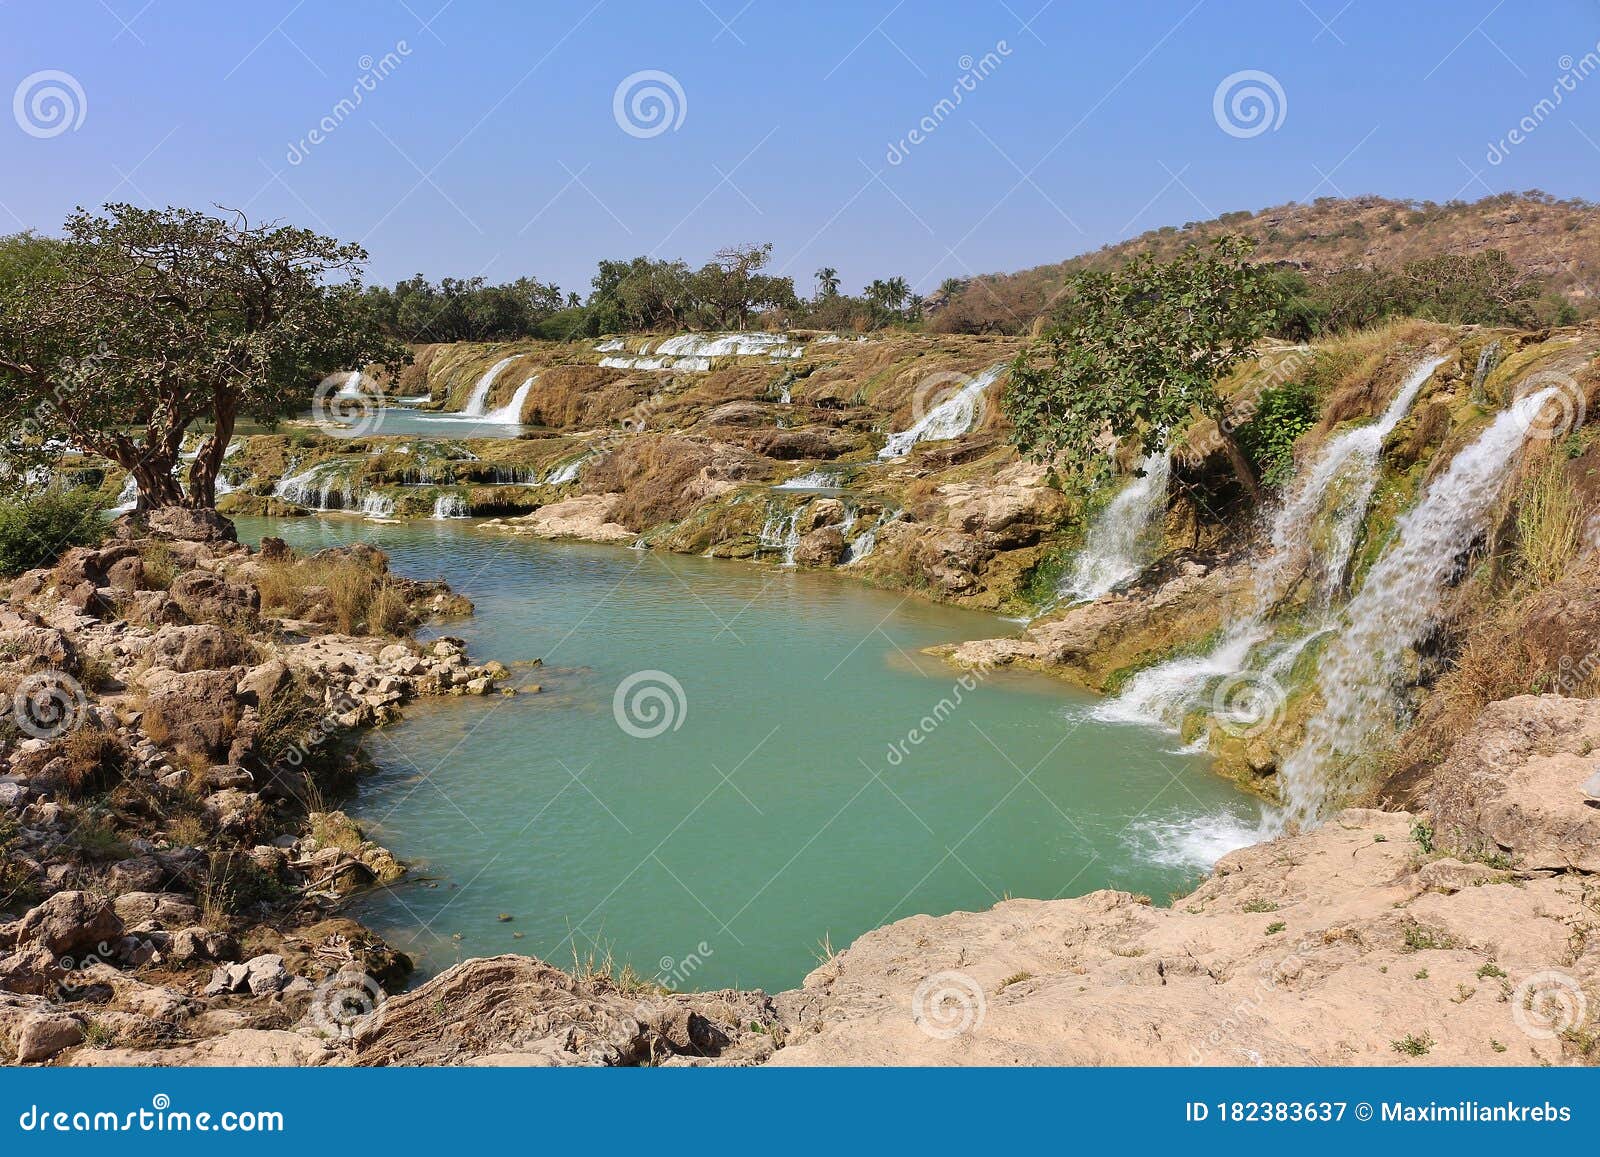 wadi dharbat rock pool with waterfalls